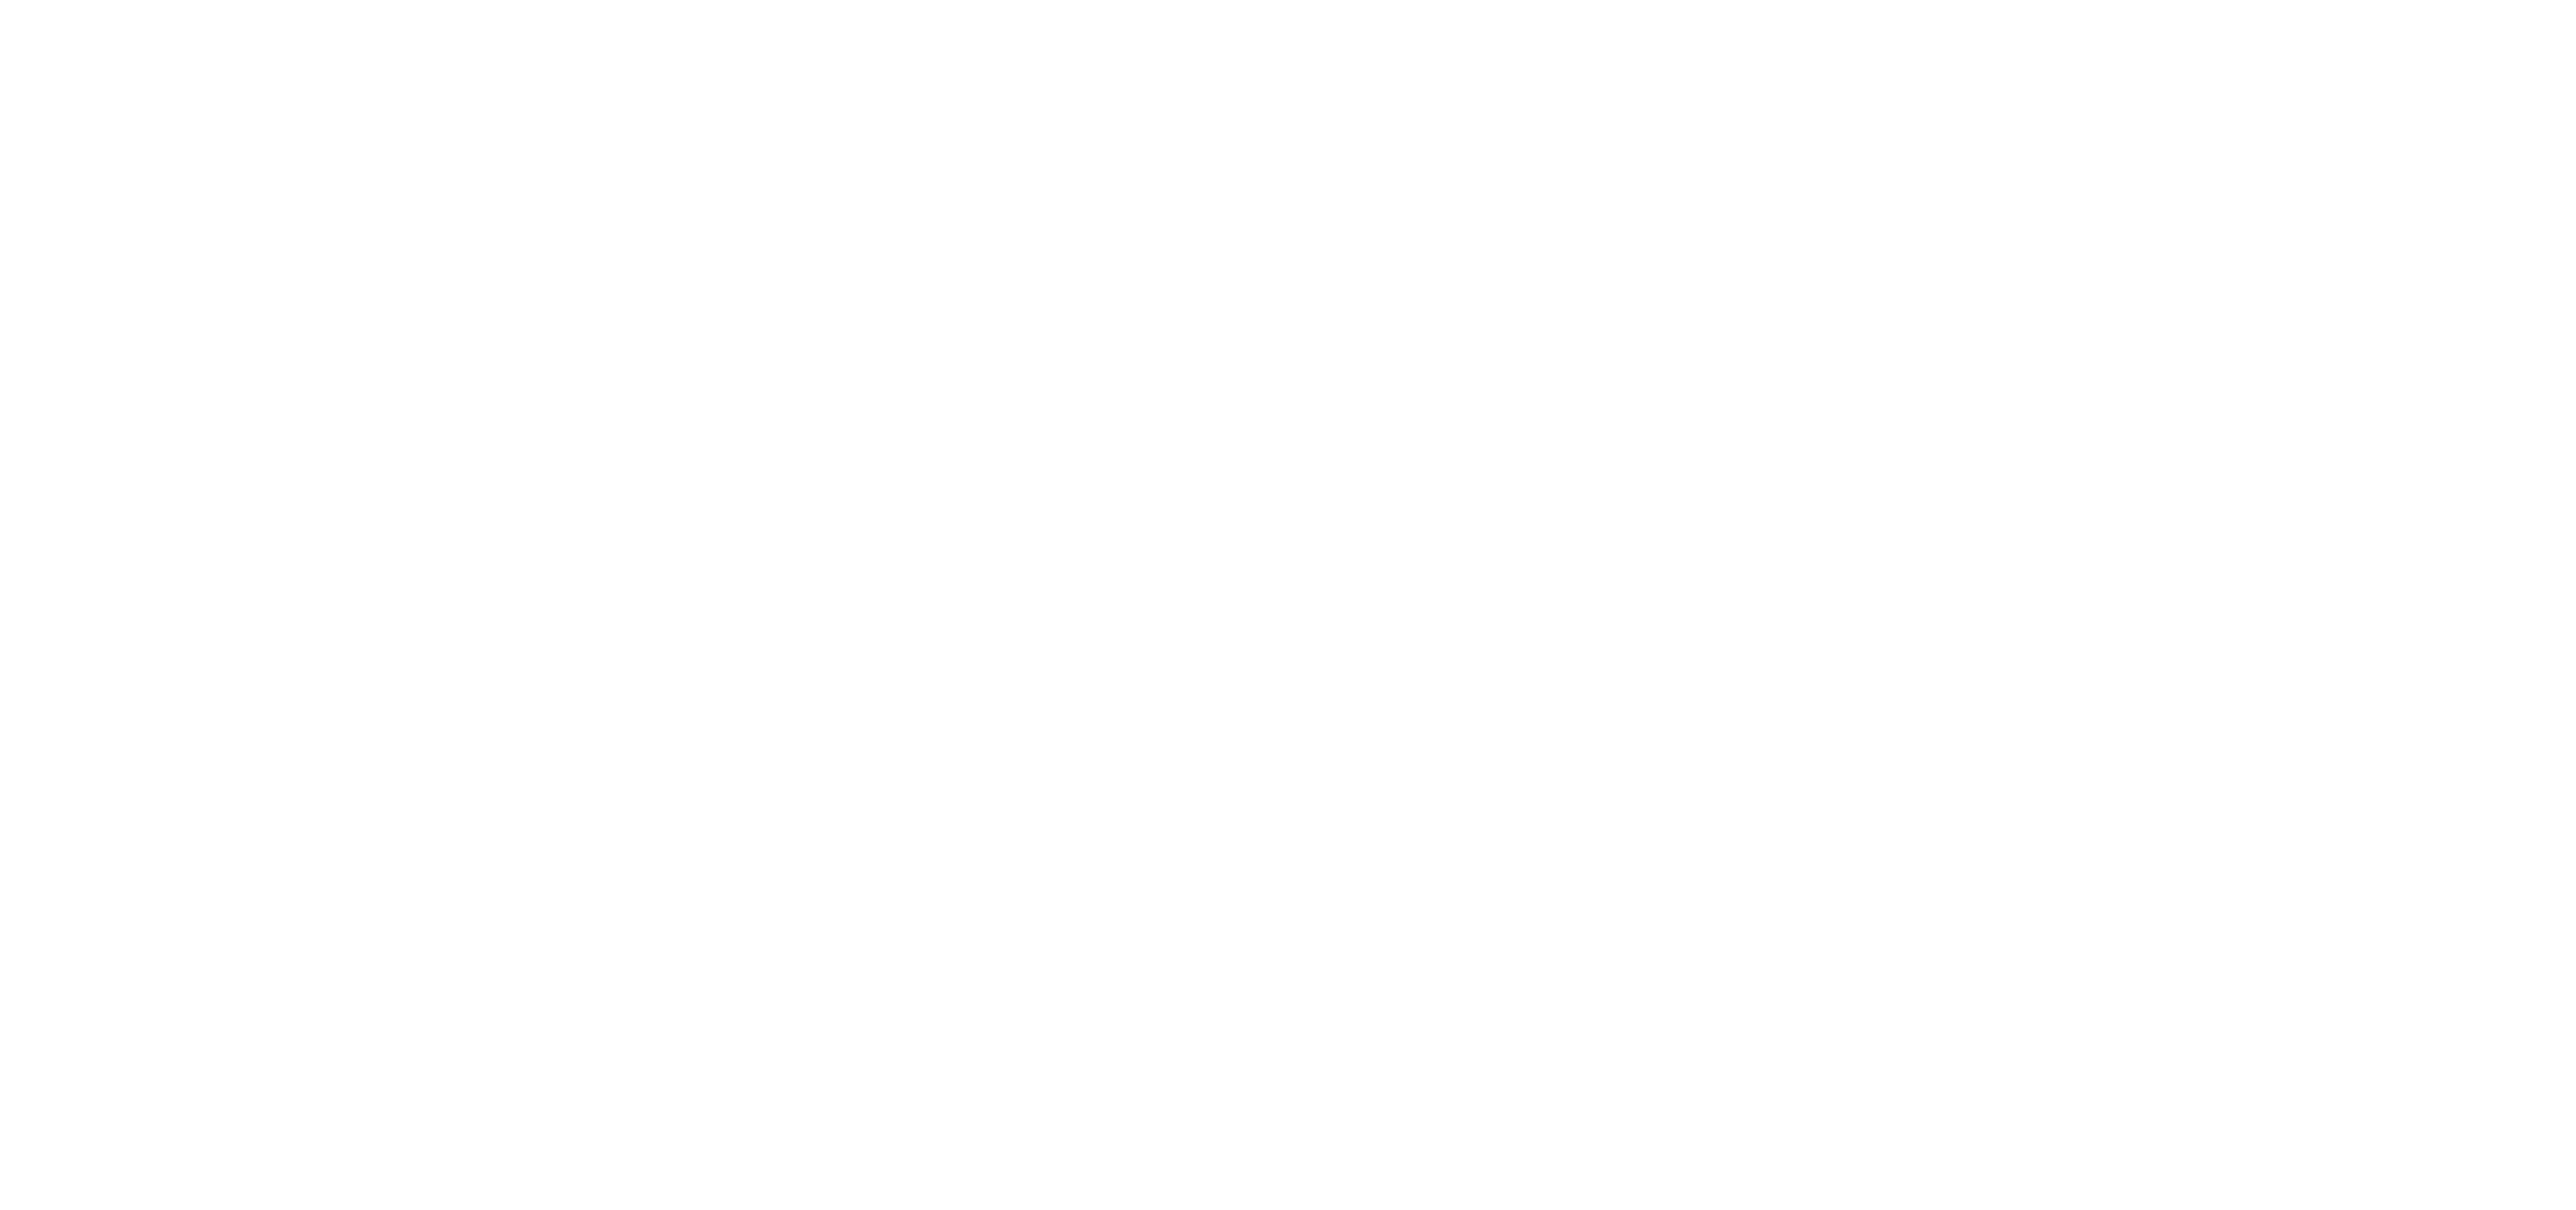 10 barrel brewing logo